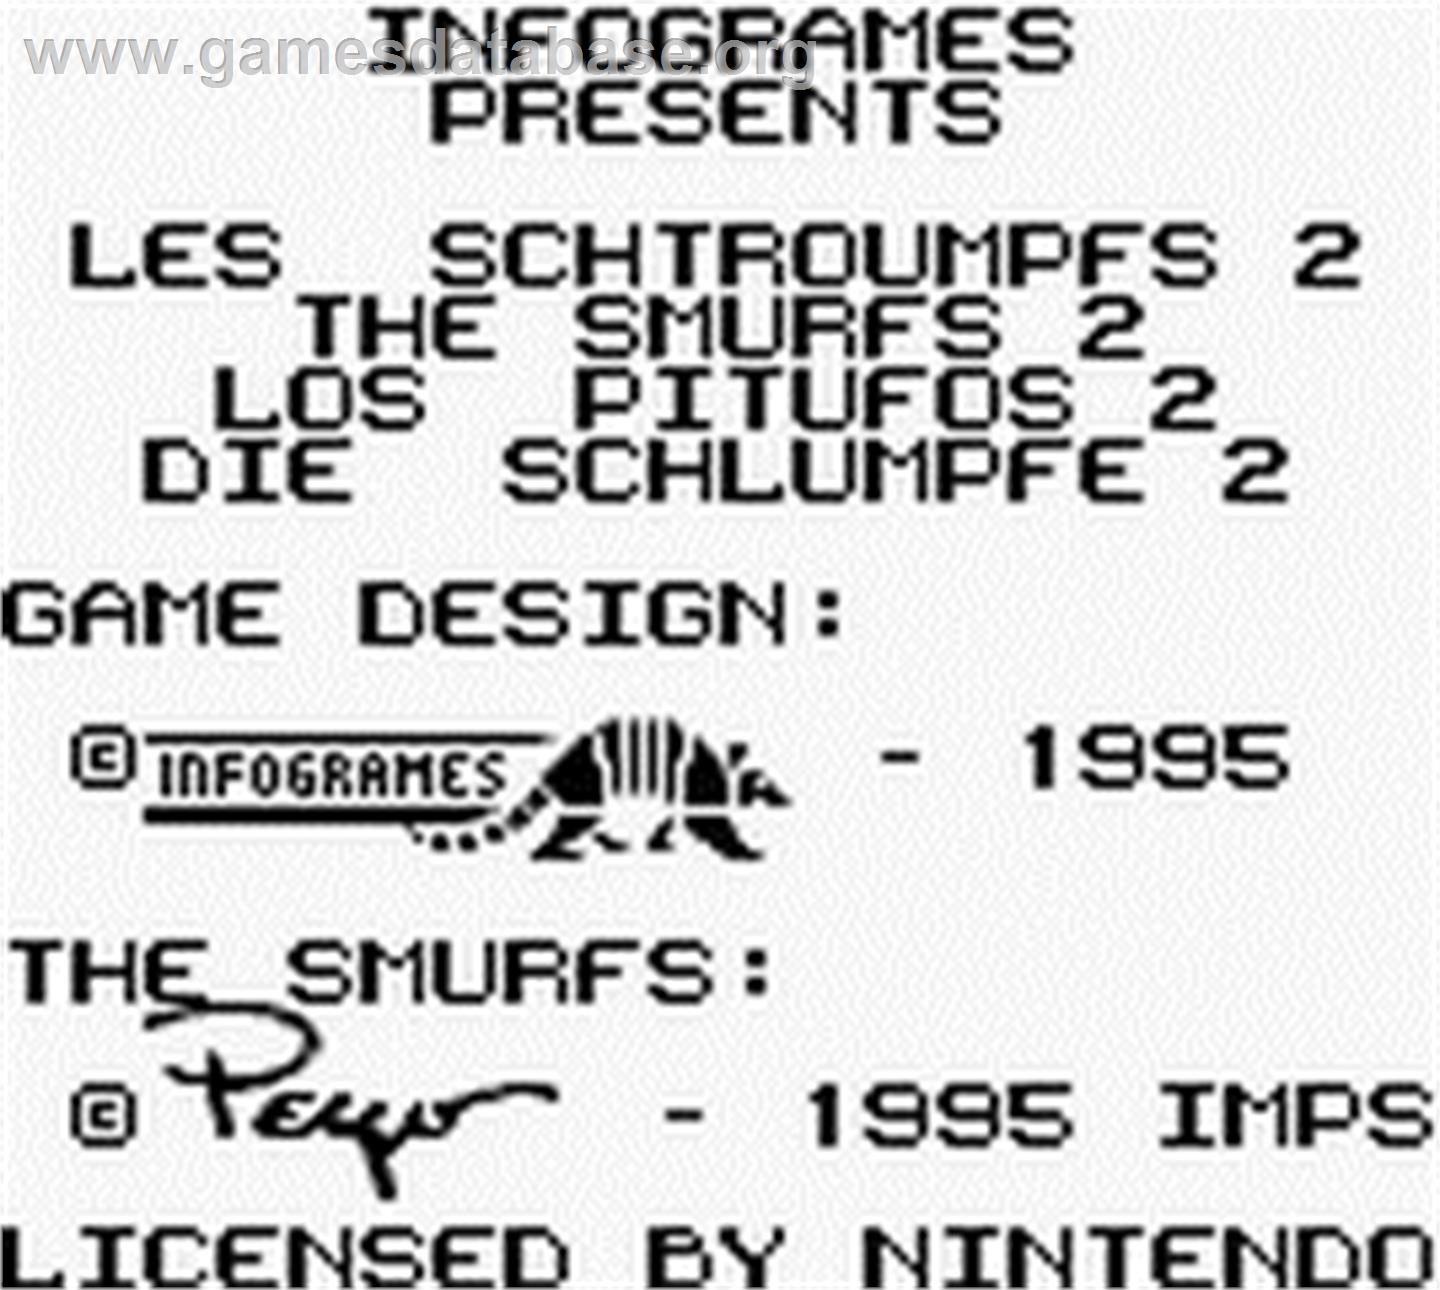 Smurfs Travel the World - Nintendo Game Boy - Artwork - Title Screen